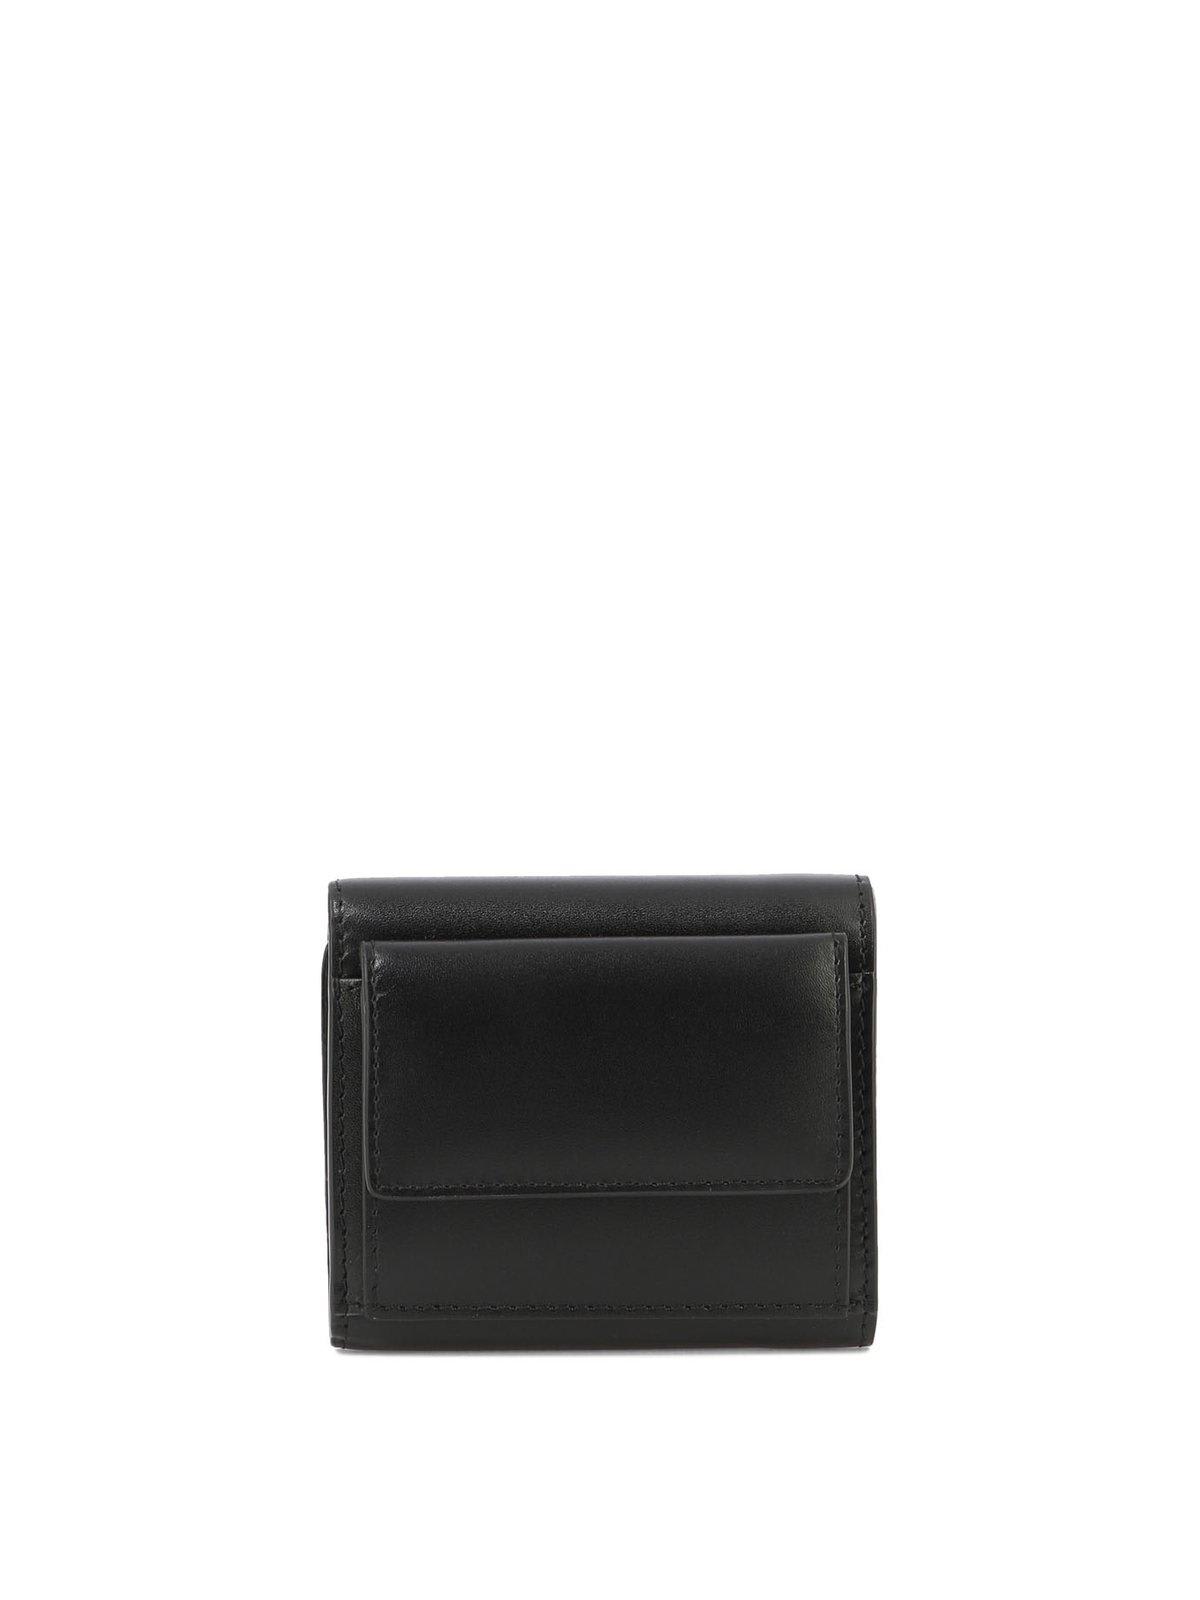 Shop Apc Lois Tri-fold Wallet In Black